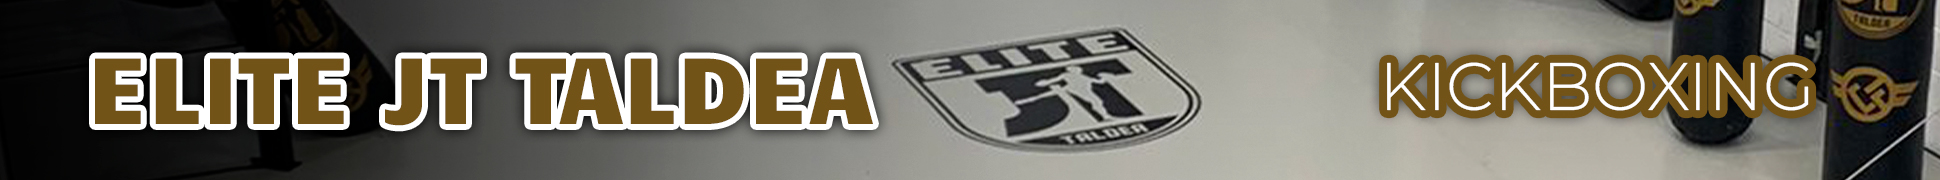 Banner de Elite JT Taldea en Bilbao